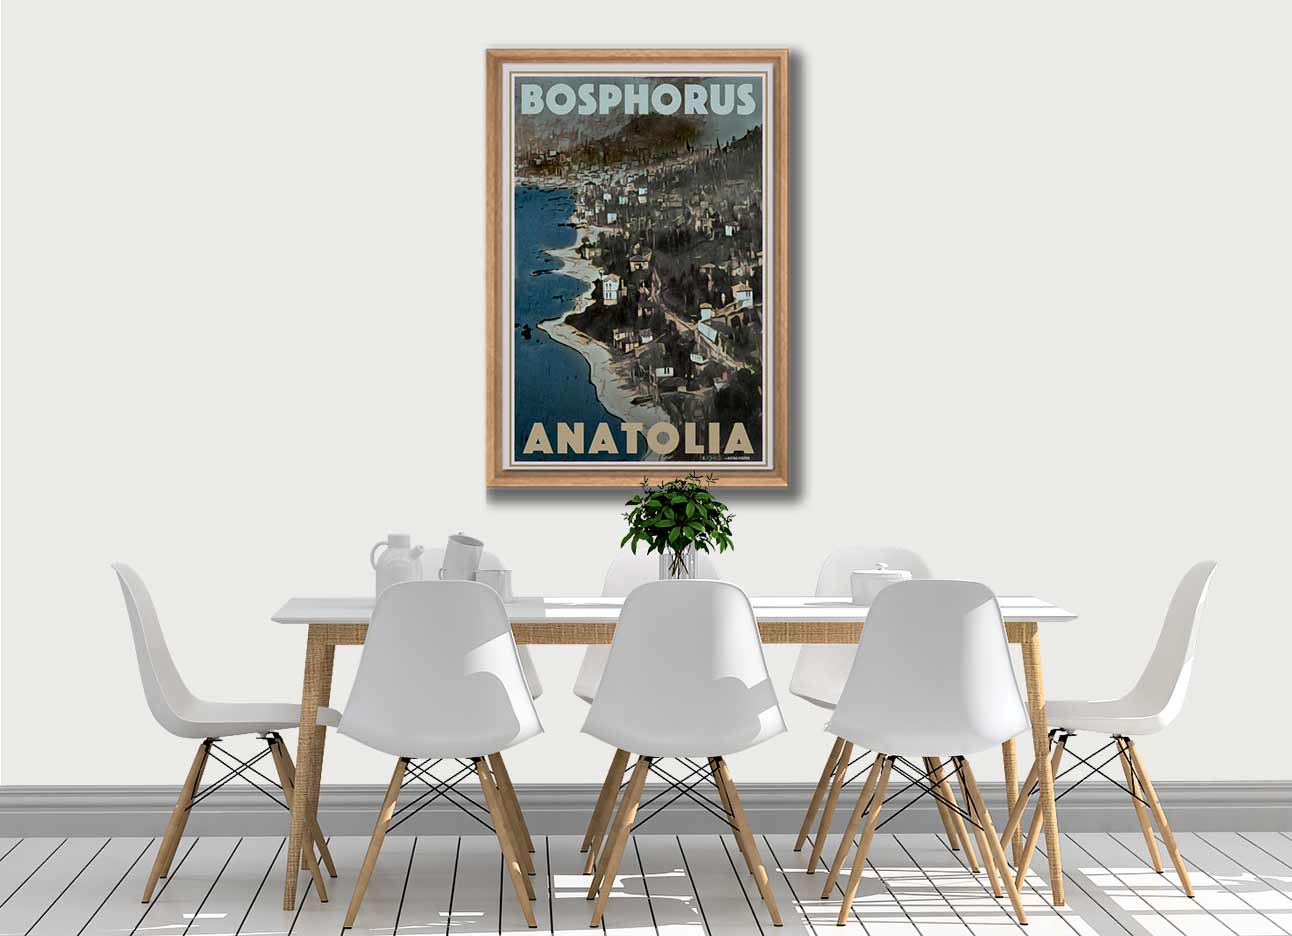 Framed BOSPHORUS ANATOLIA POSTER | Limited Edition | Original Design by Alecse™ | Vintage Travel Poster Series